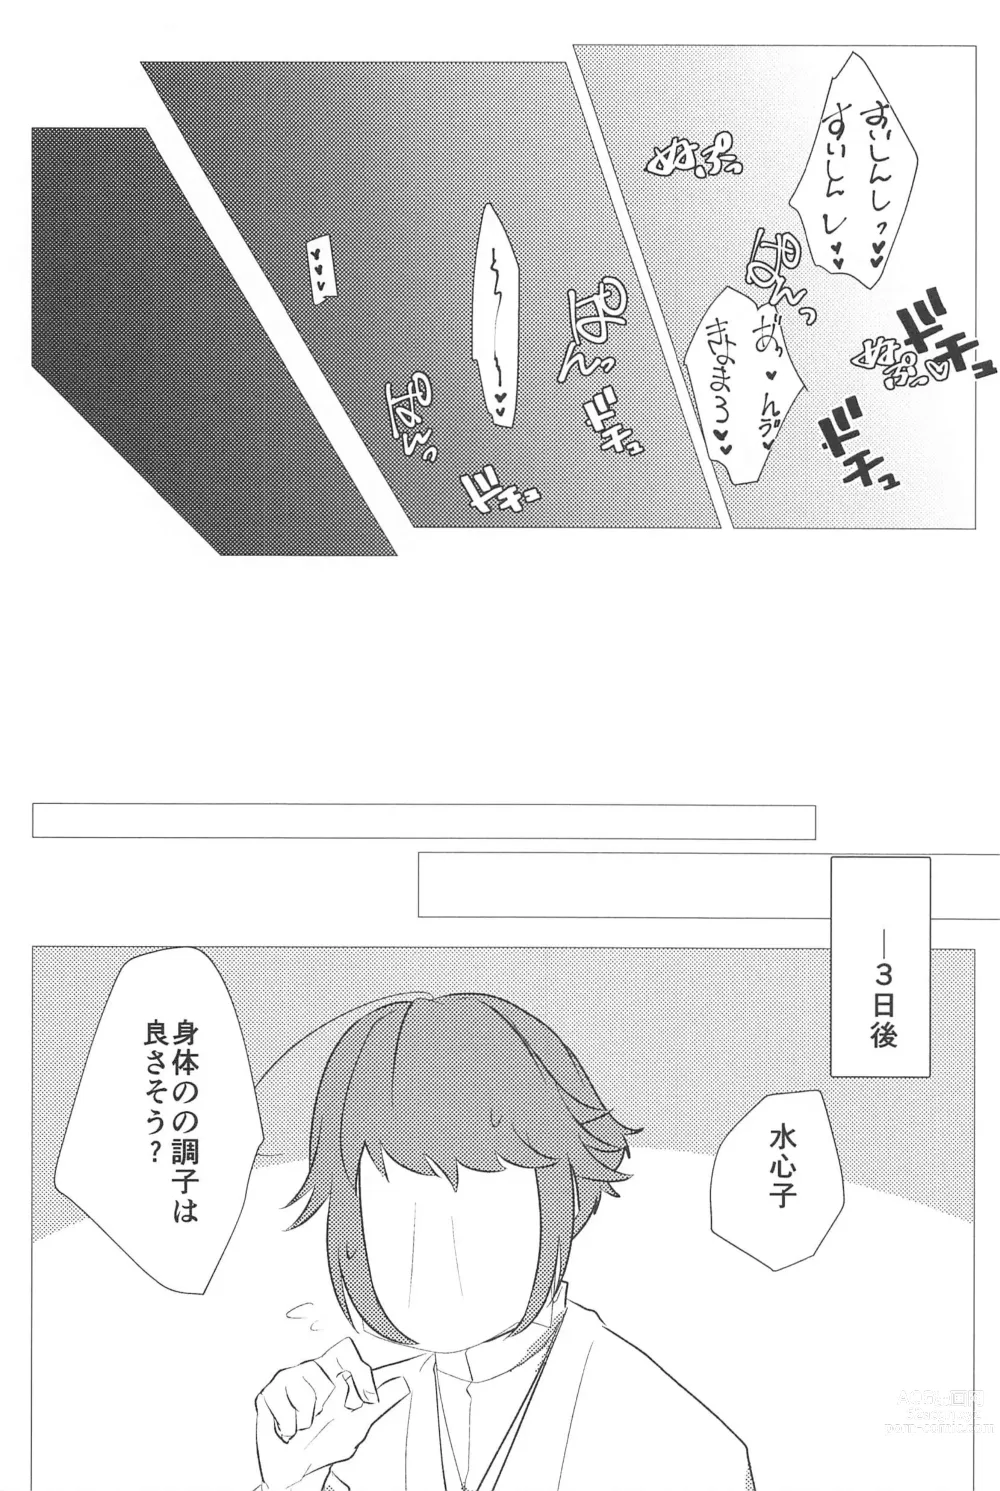 Page 31 of doujinshi Konnanotte Nai!